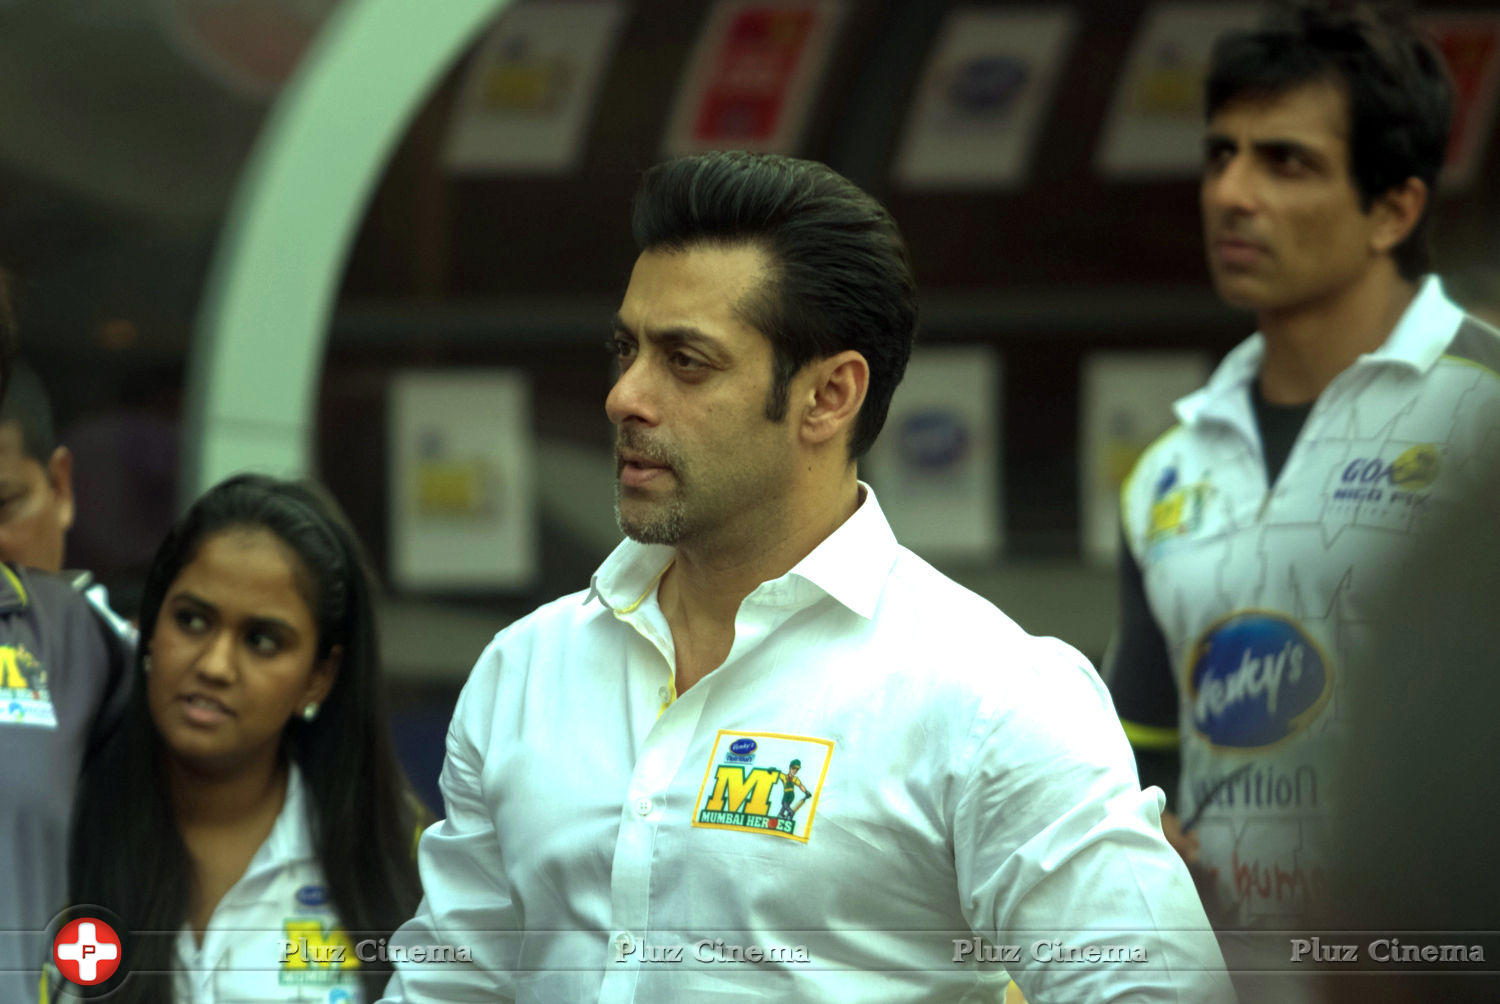 Salman Khan - CCL 4 Mumbai Heroes Vs Chennai Rhinos Match Photos | Picture 702848